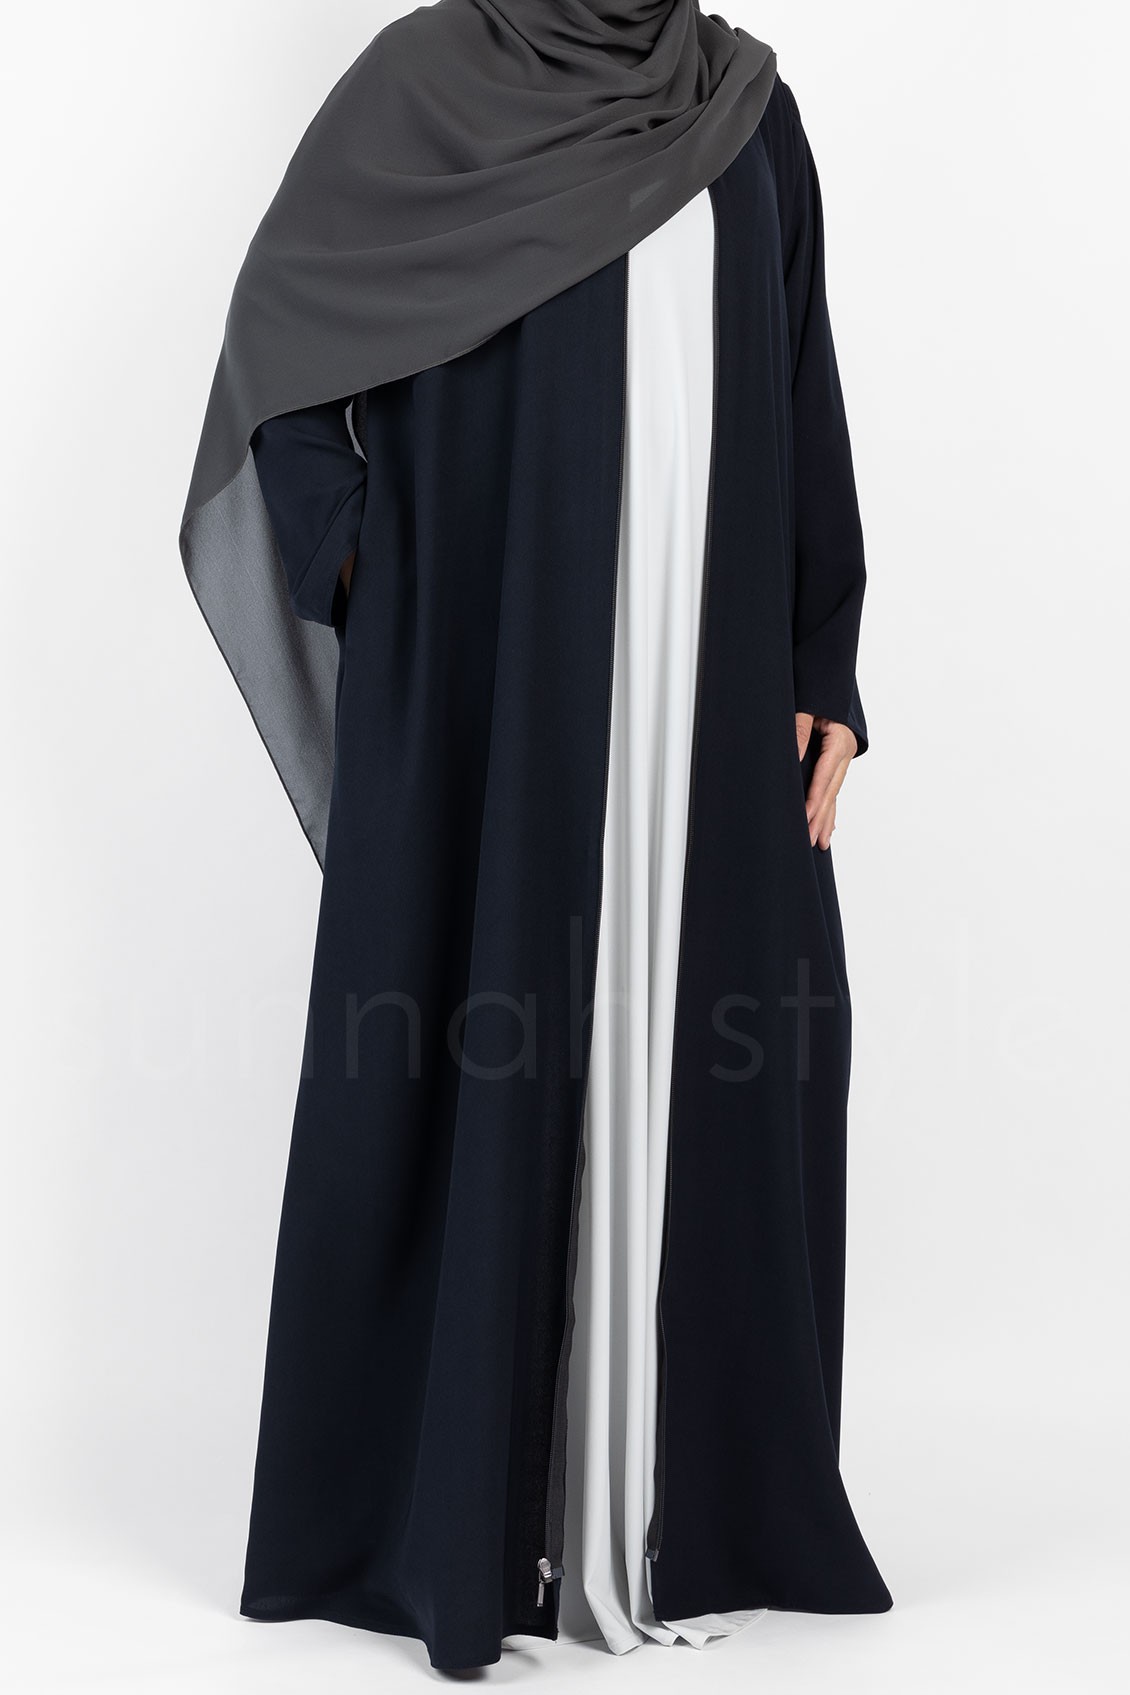 Sunnah Style Essentials Full Zip Abaya Navy Blue